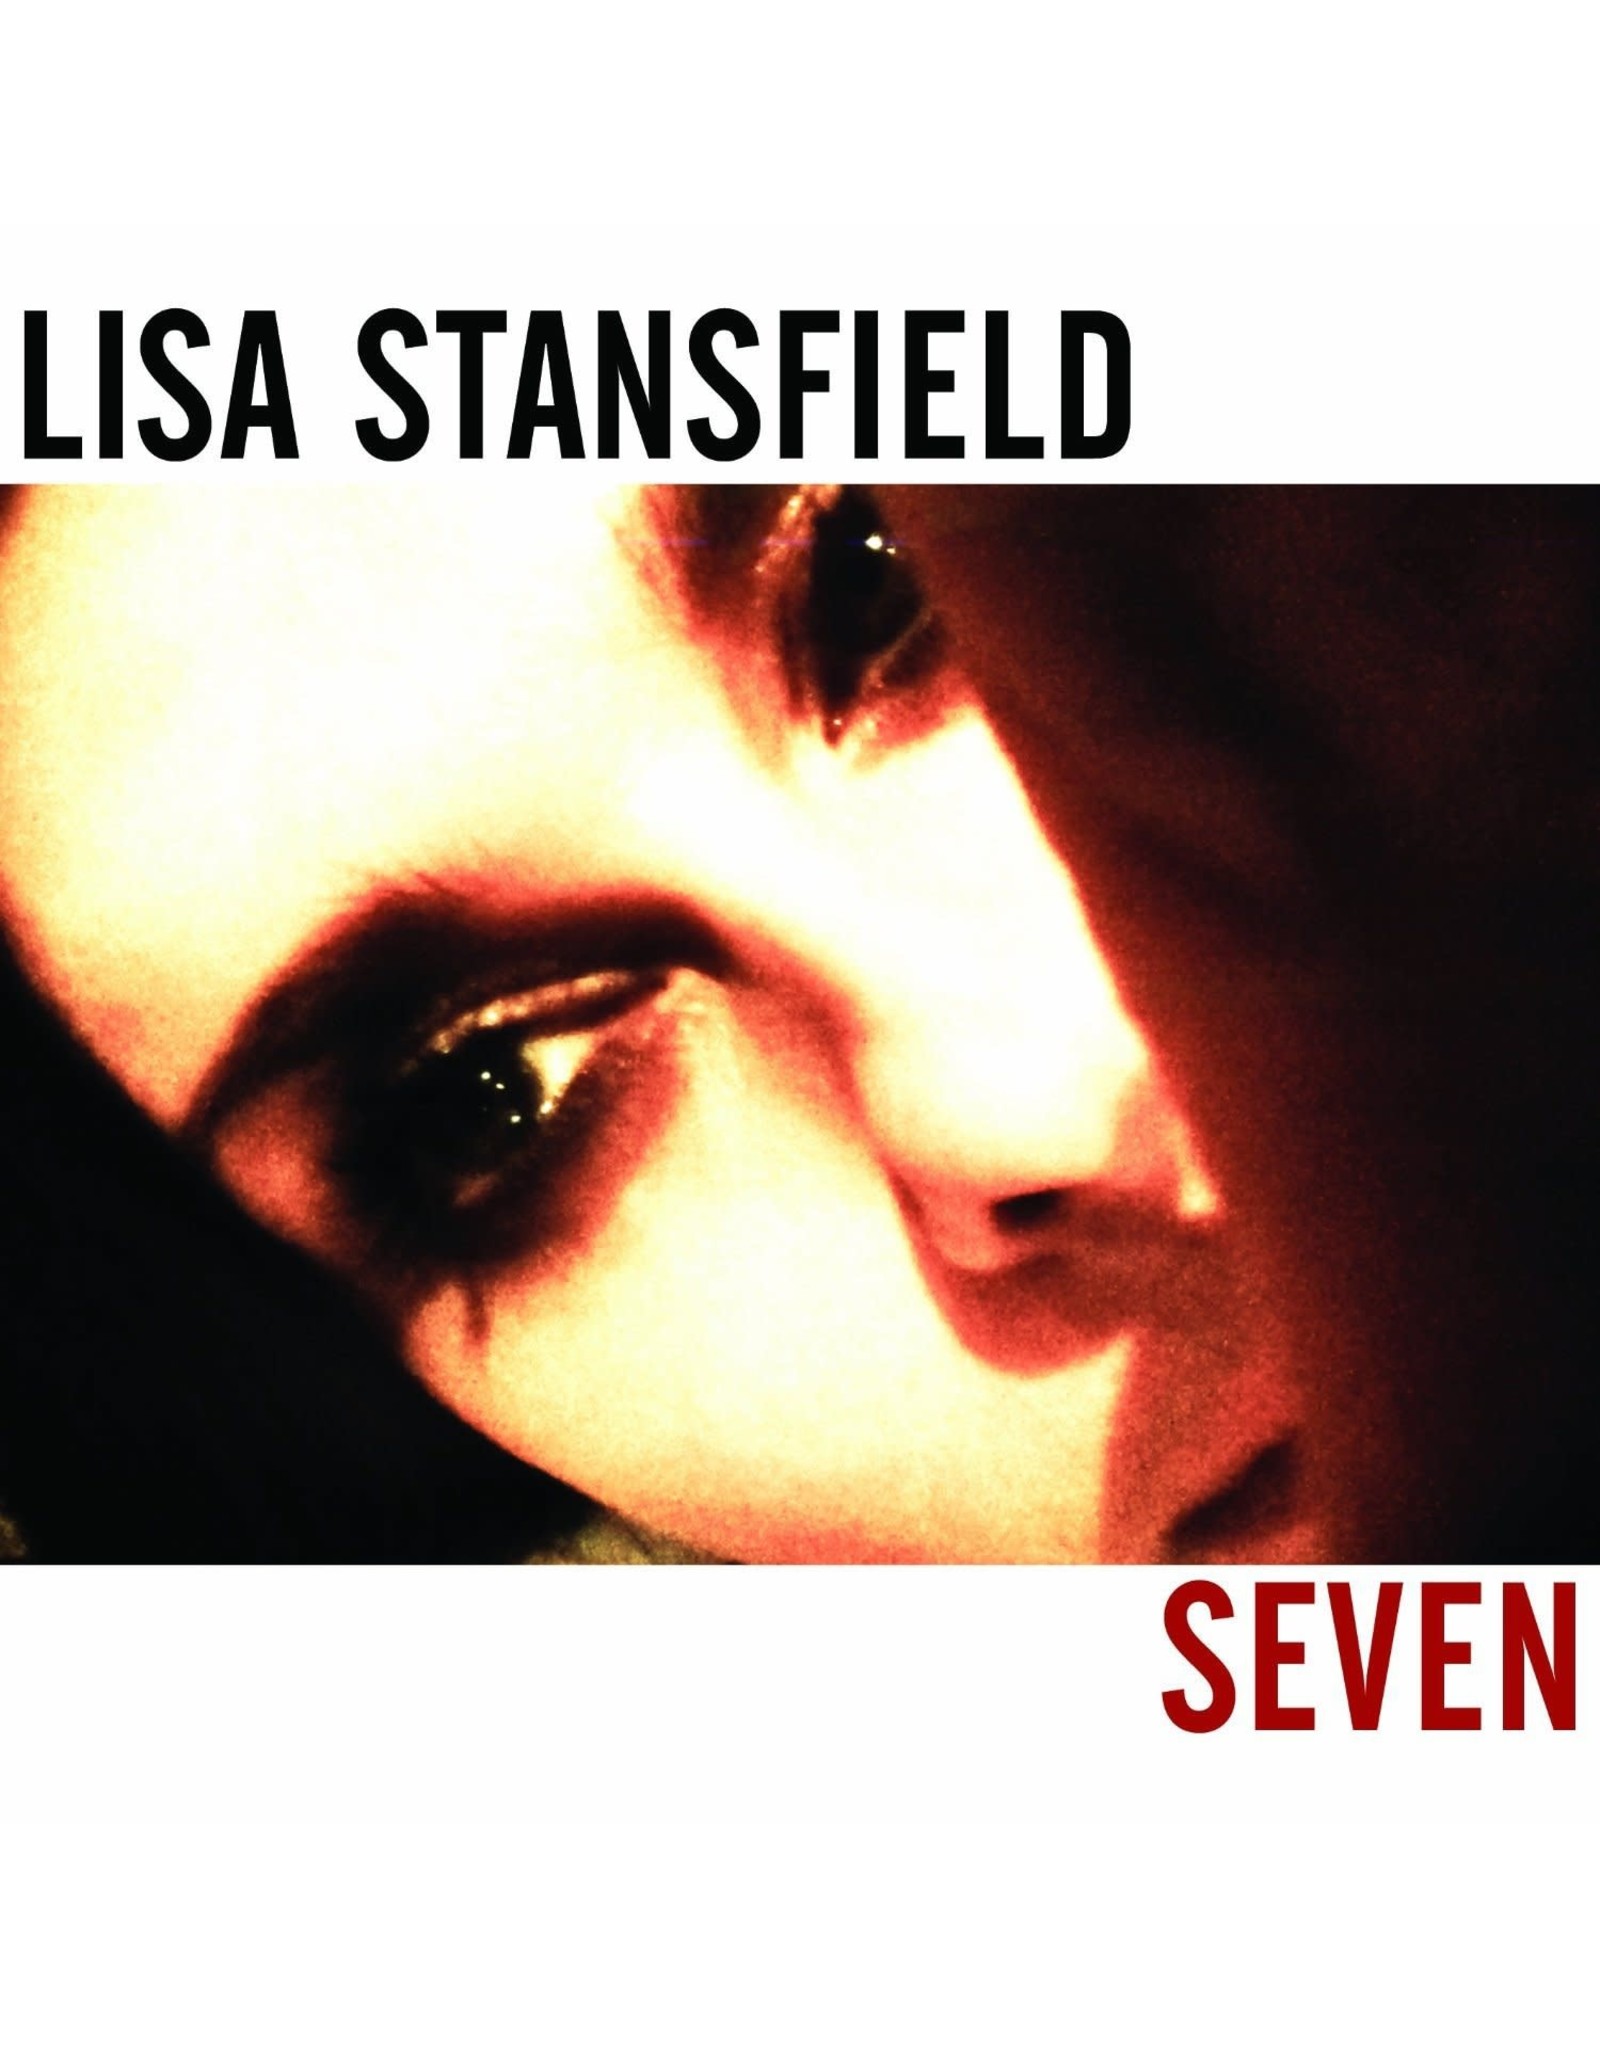 Lisa Stansfield - Seven